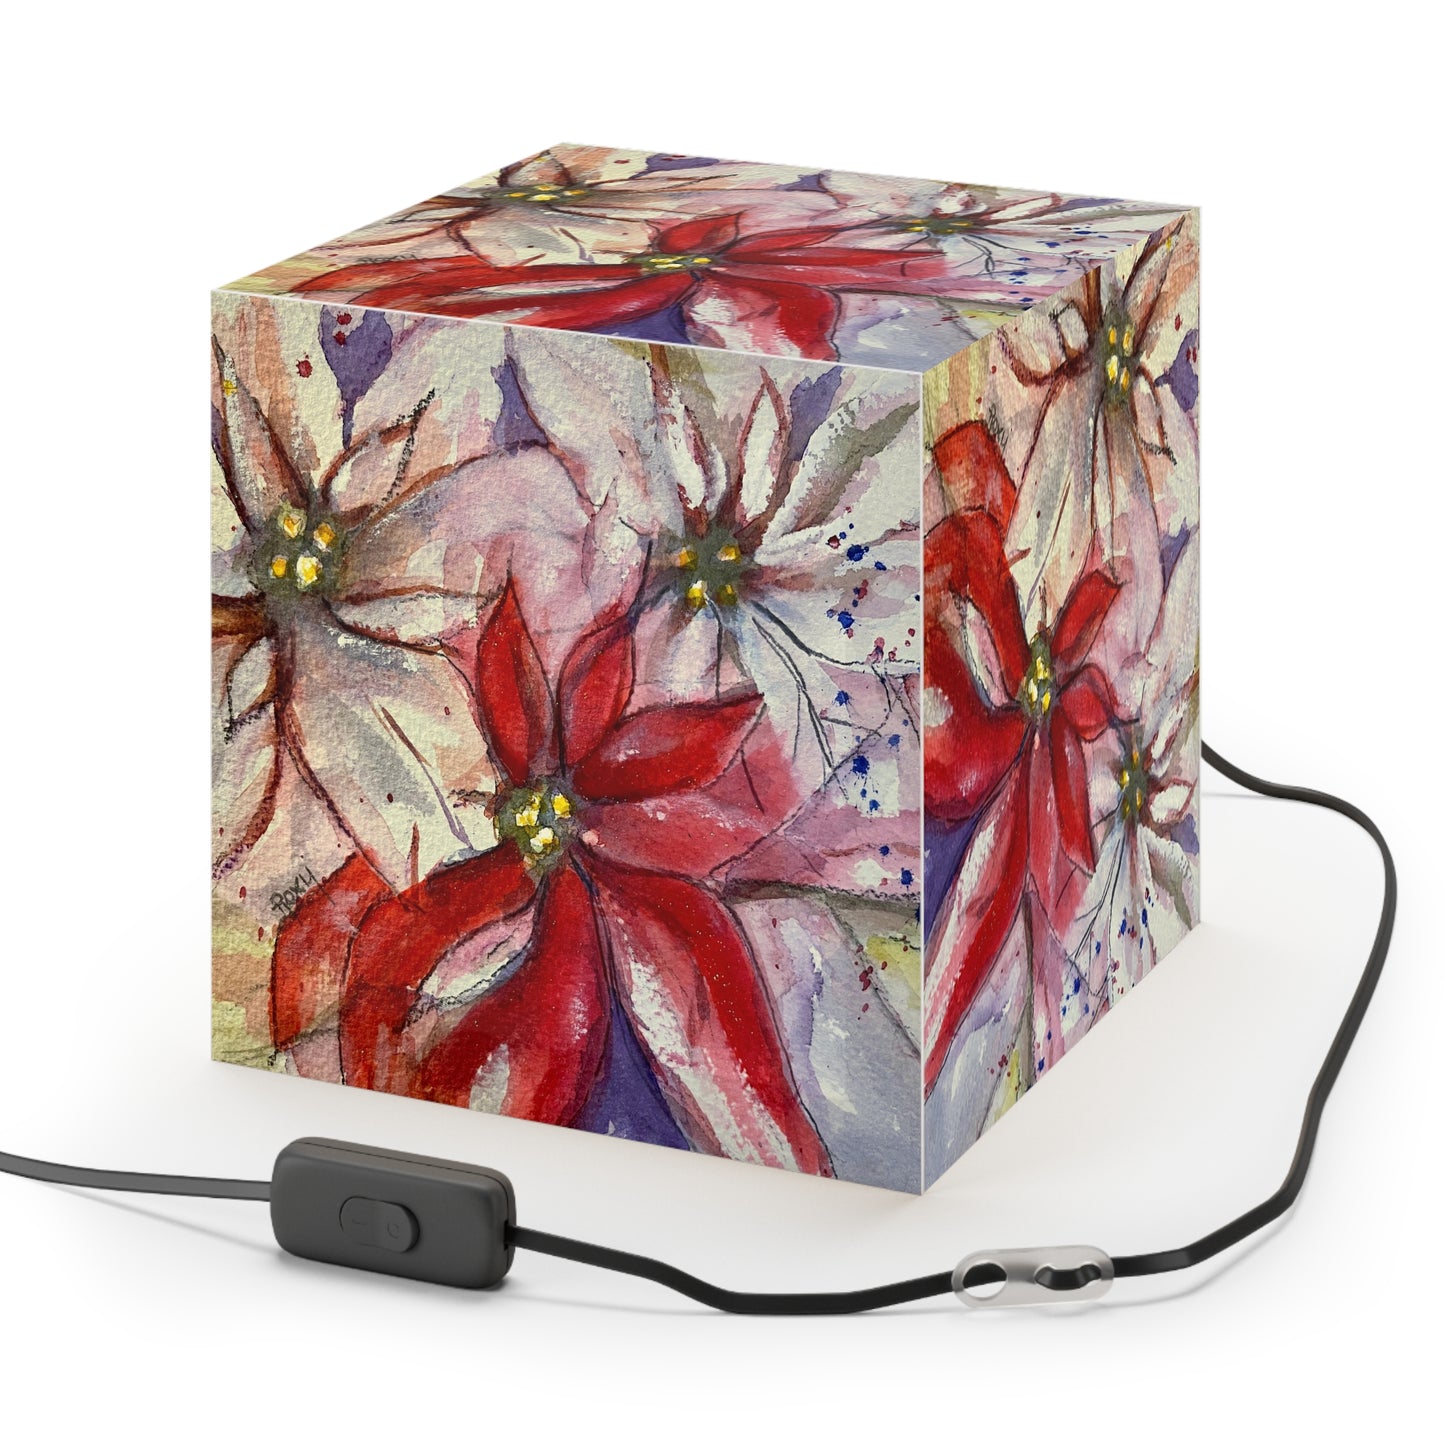 Poinsettias Cube Lamp